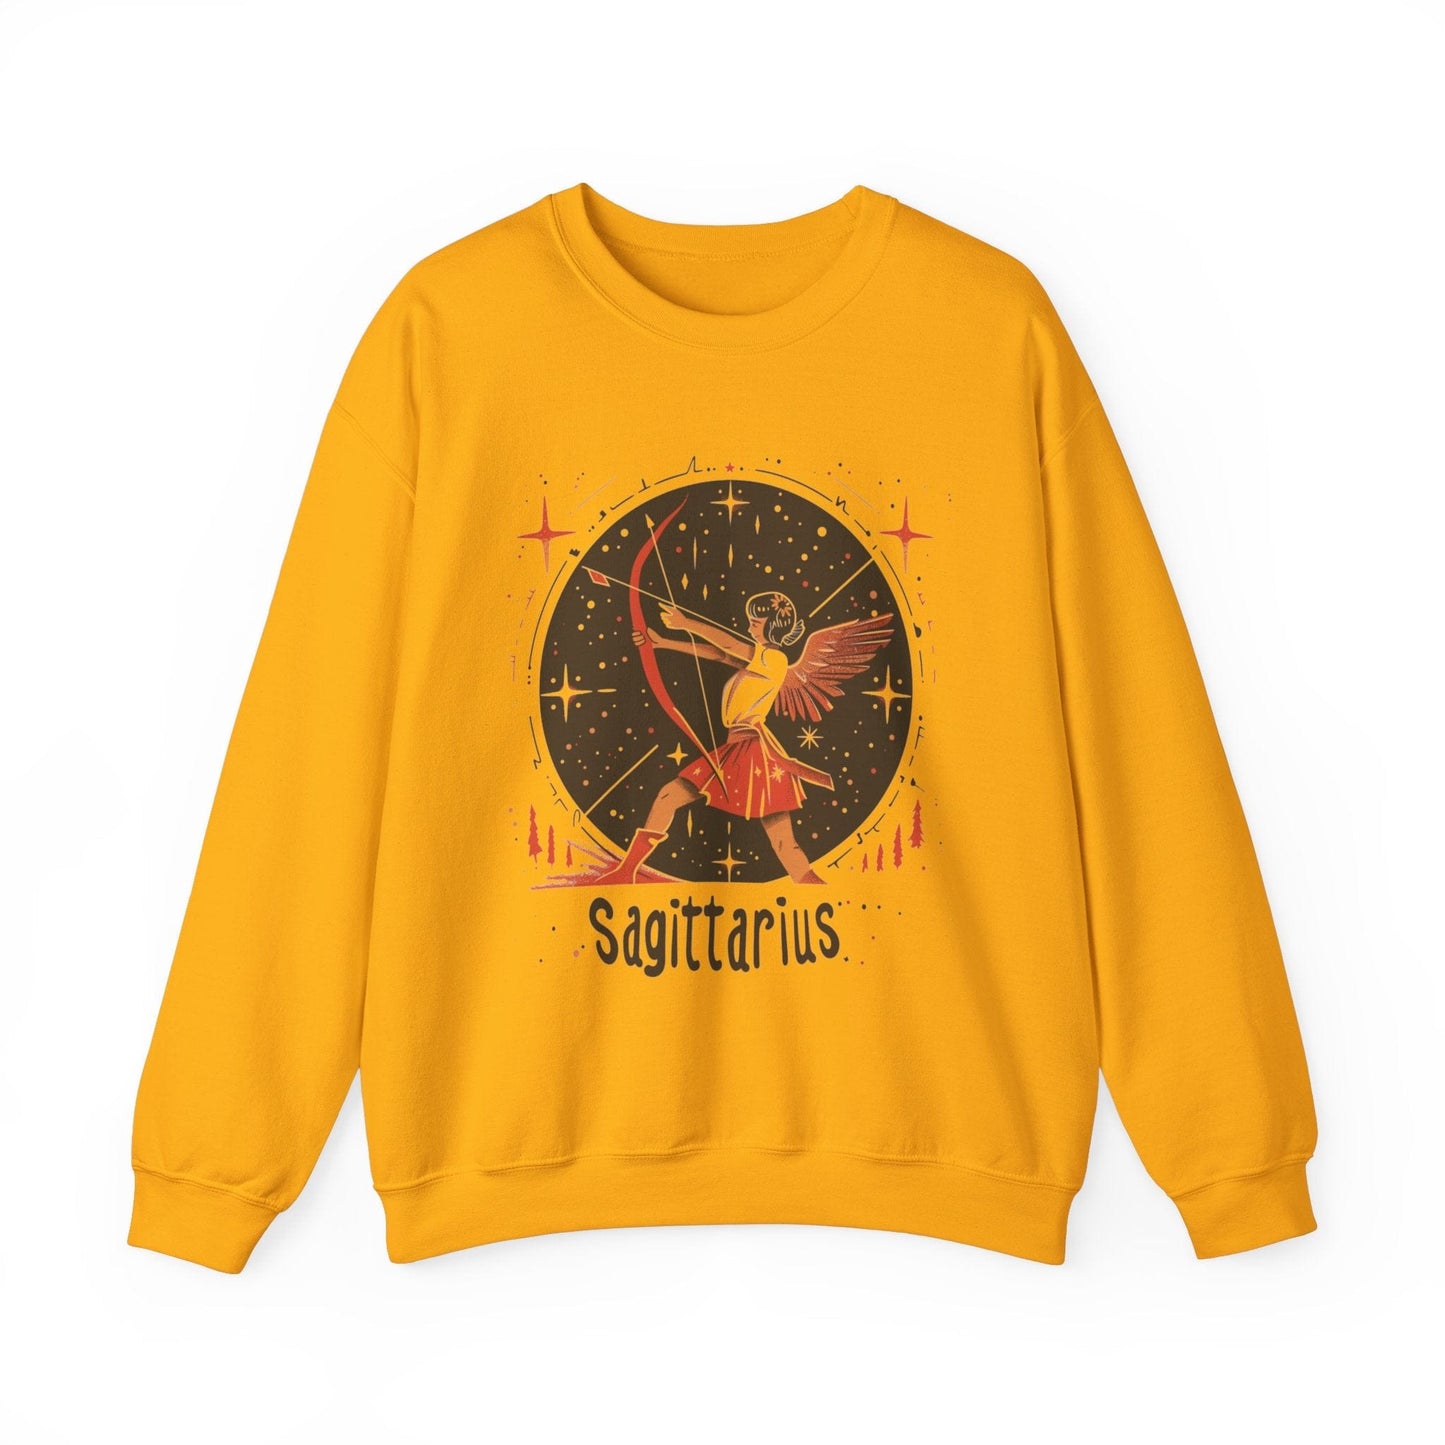 Sweatshirt S / Gold Galactic Archer Sagittarius Sweater: Adventure Awaits in the Stars